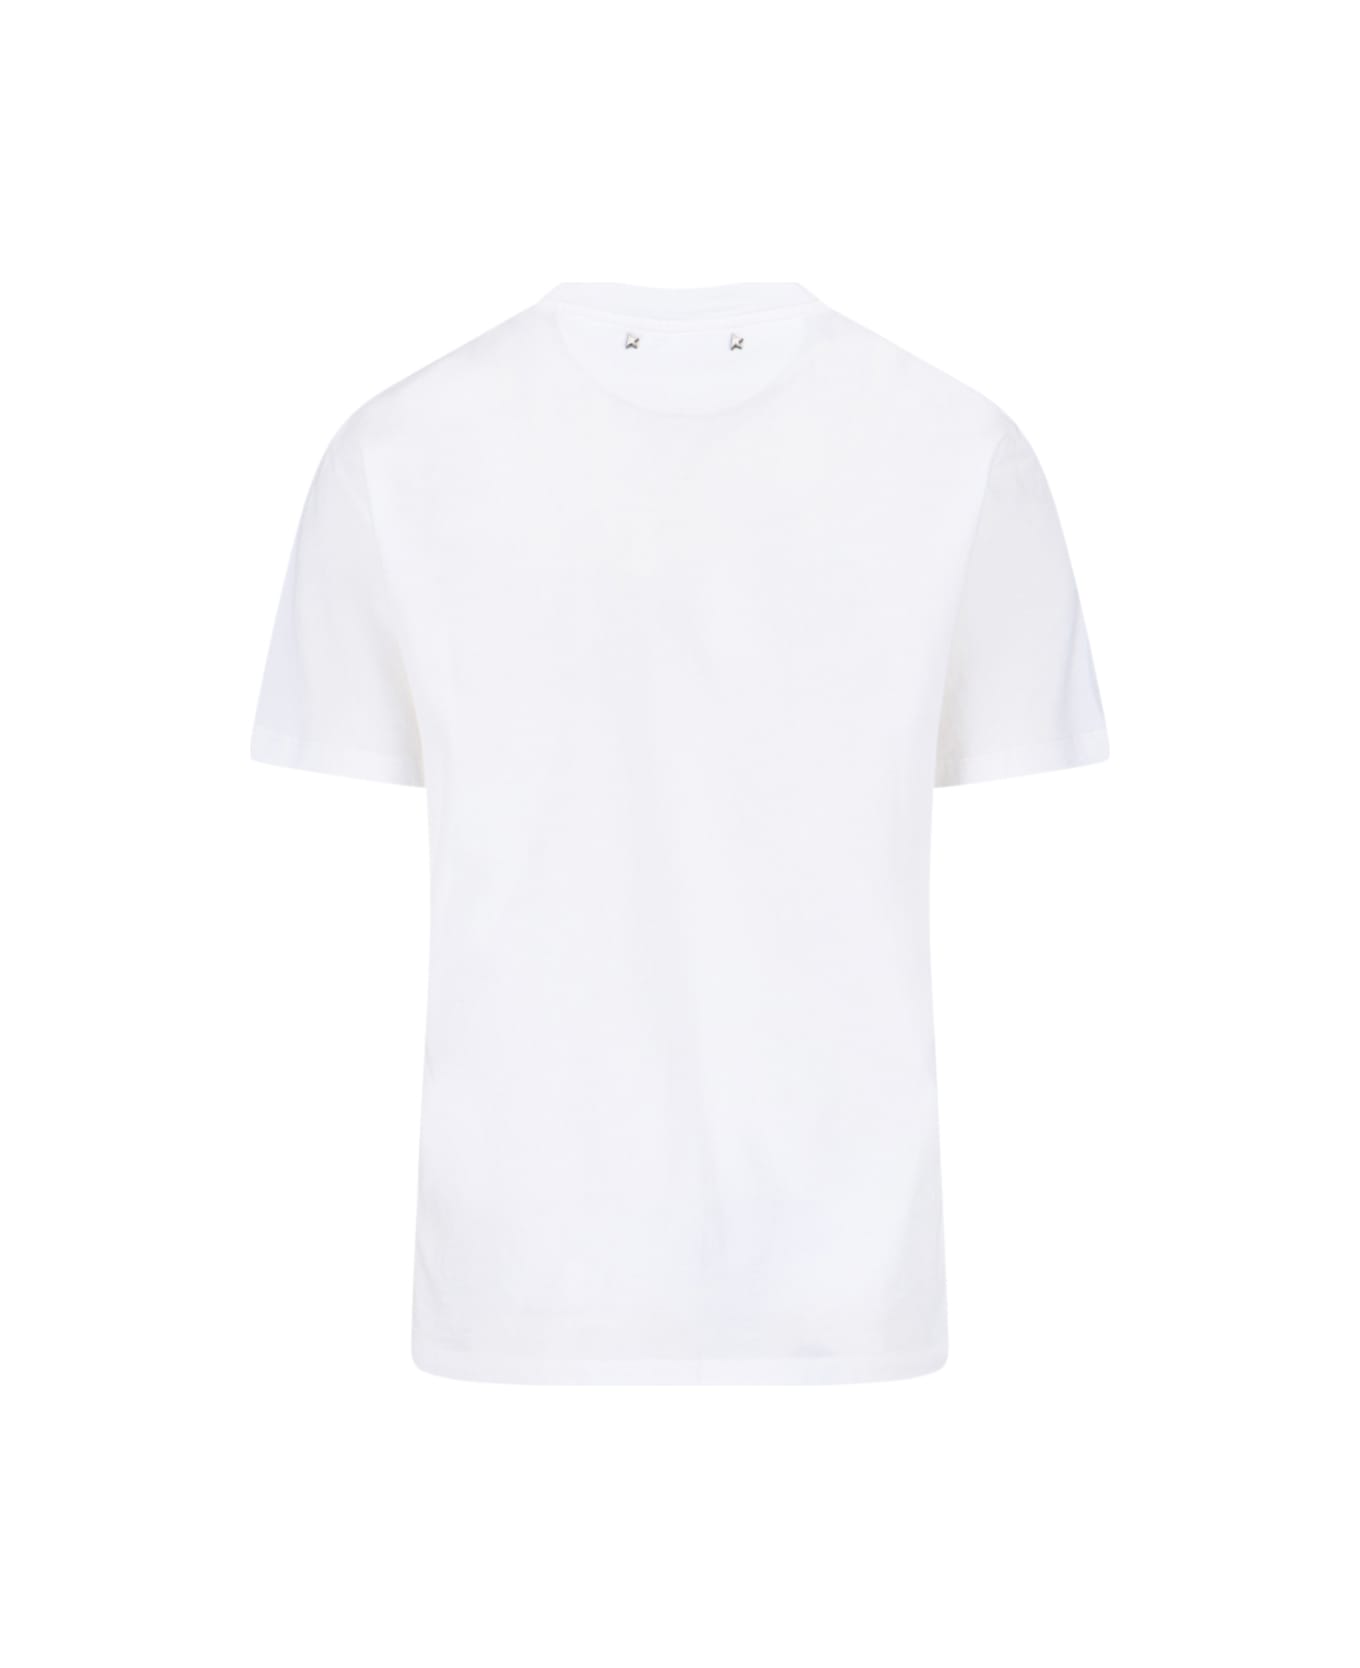 Golden Goose Crystal Detail T-shirt - White